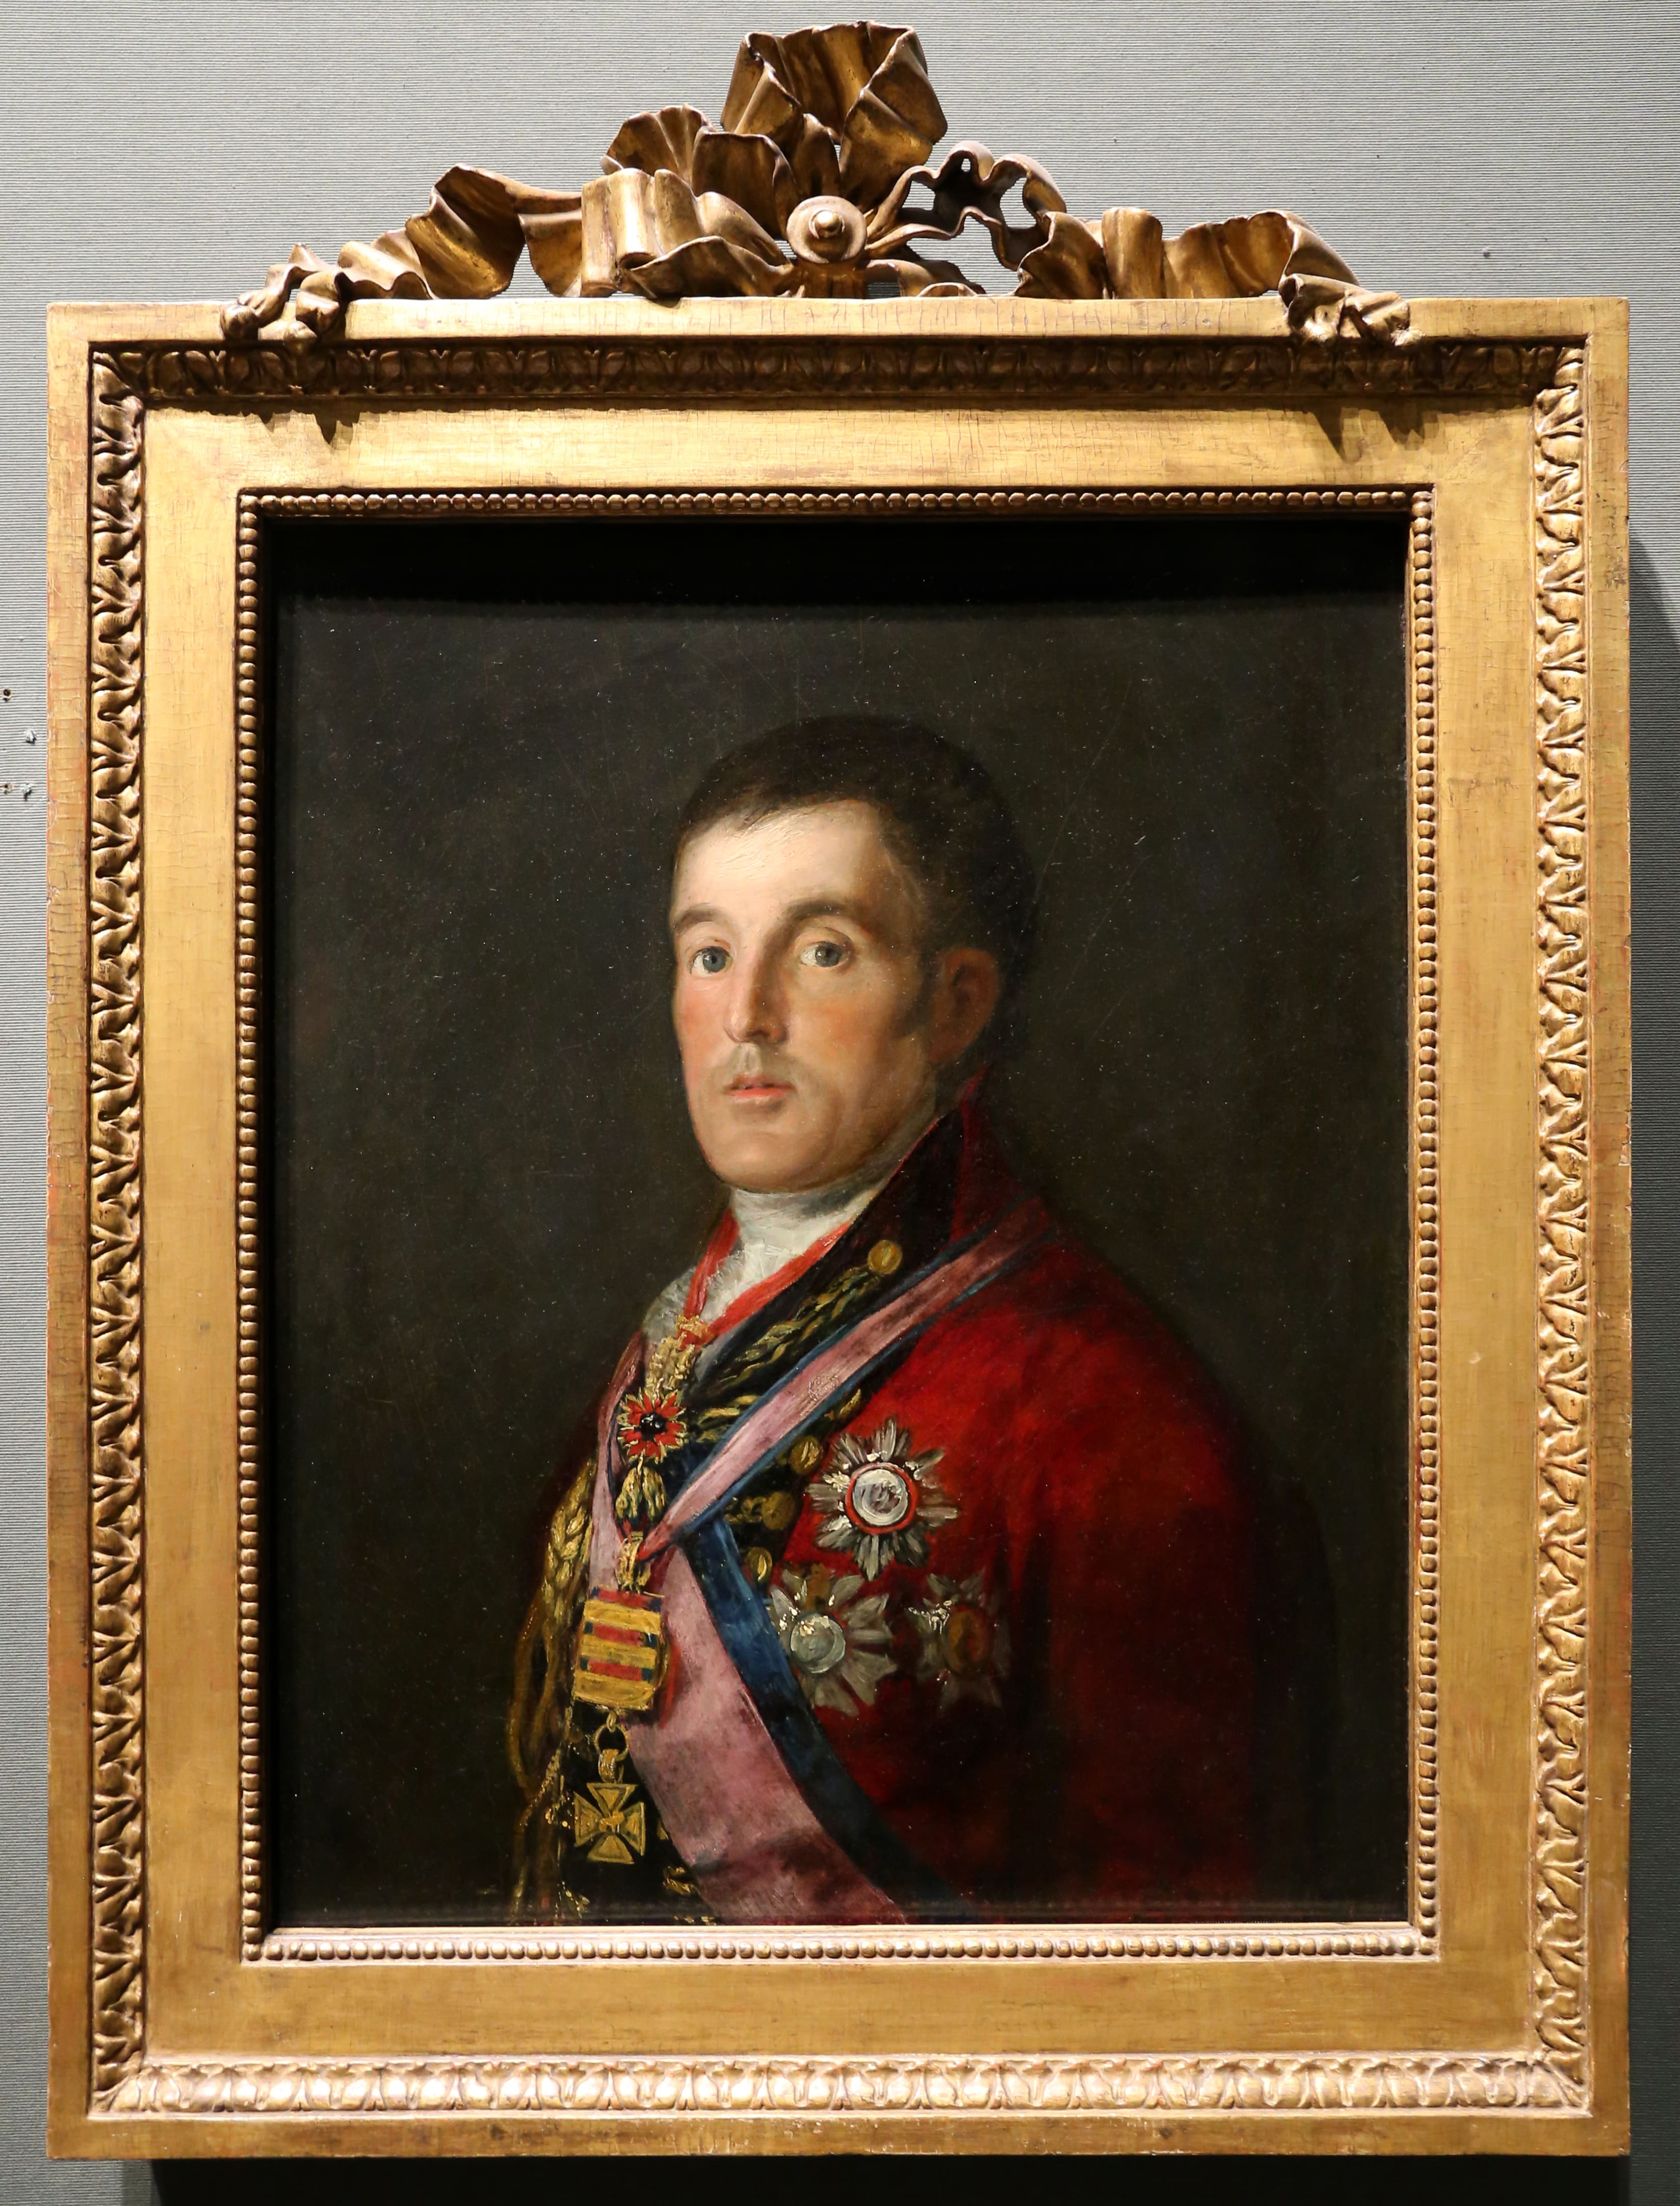 Francisco Goya, il duca di wellington, 1812-14 ca.